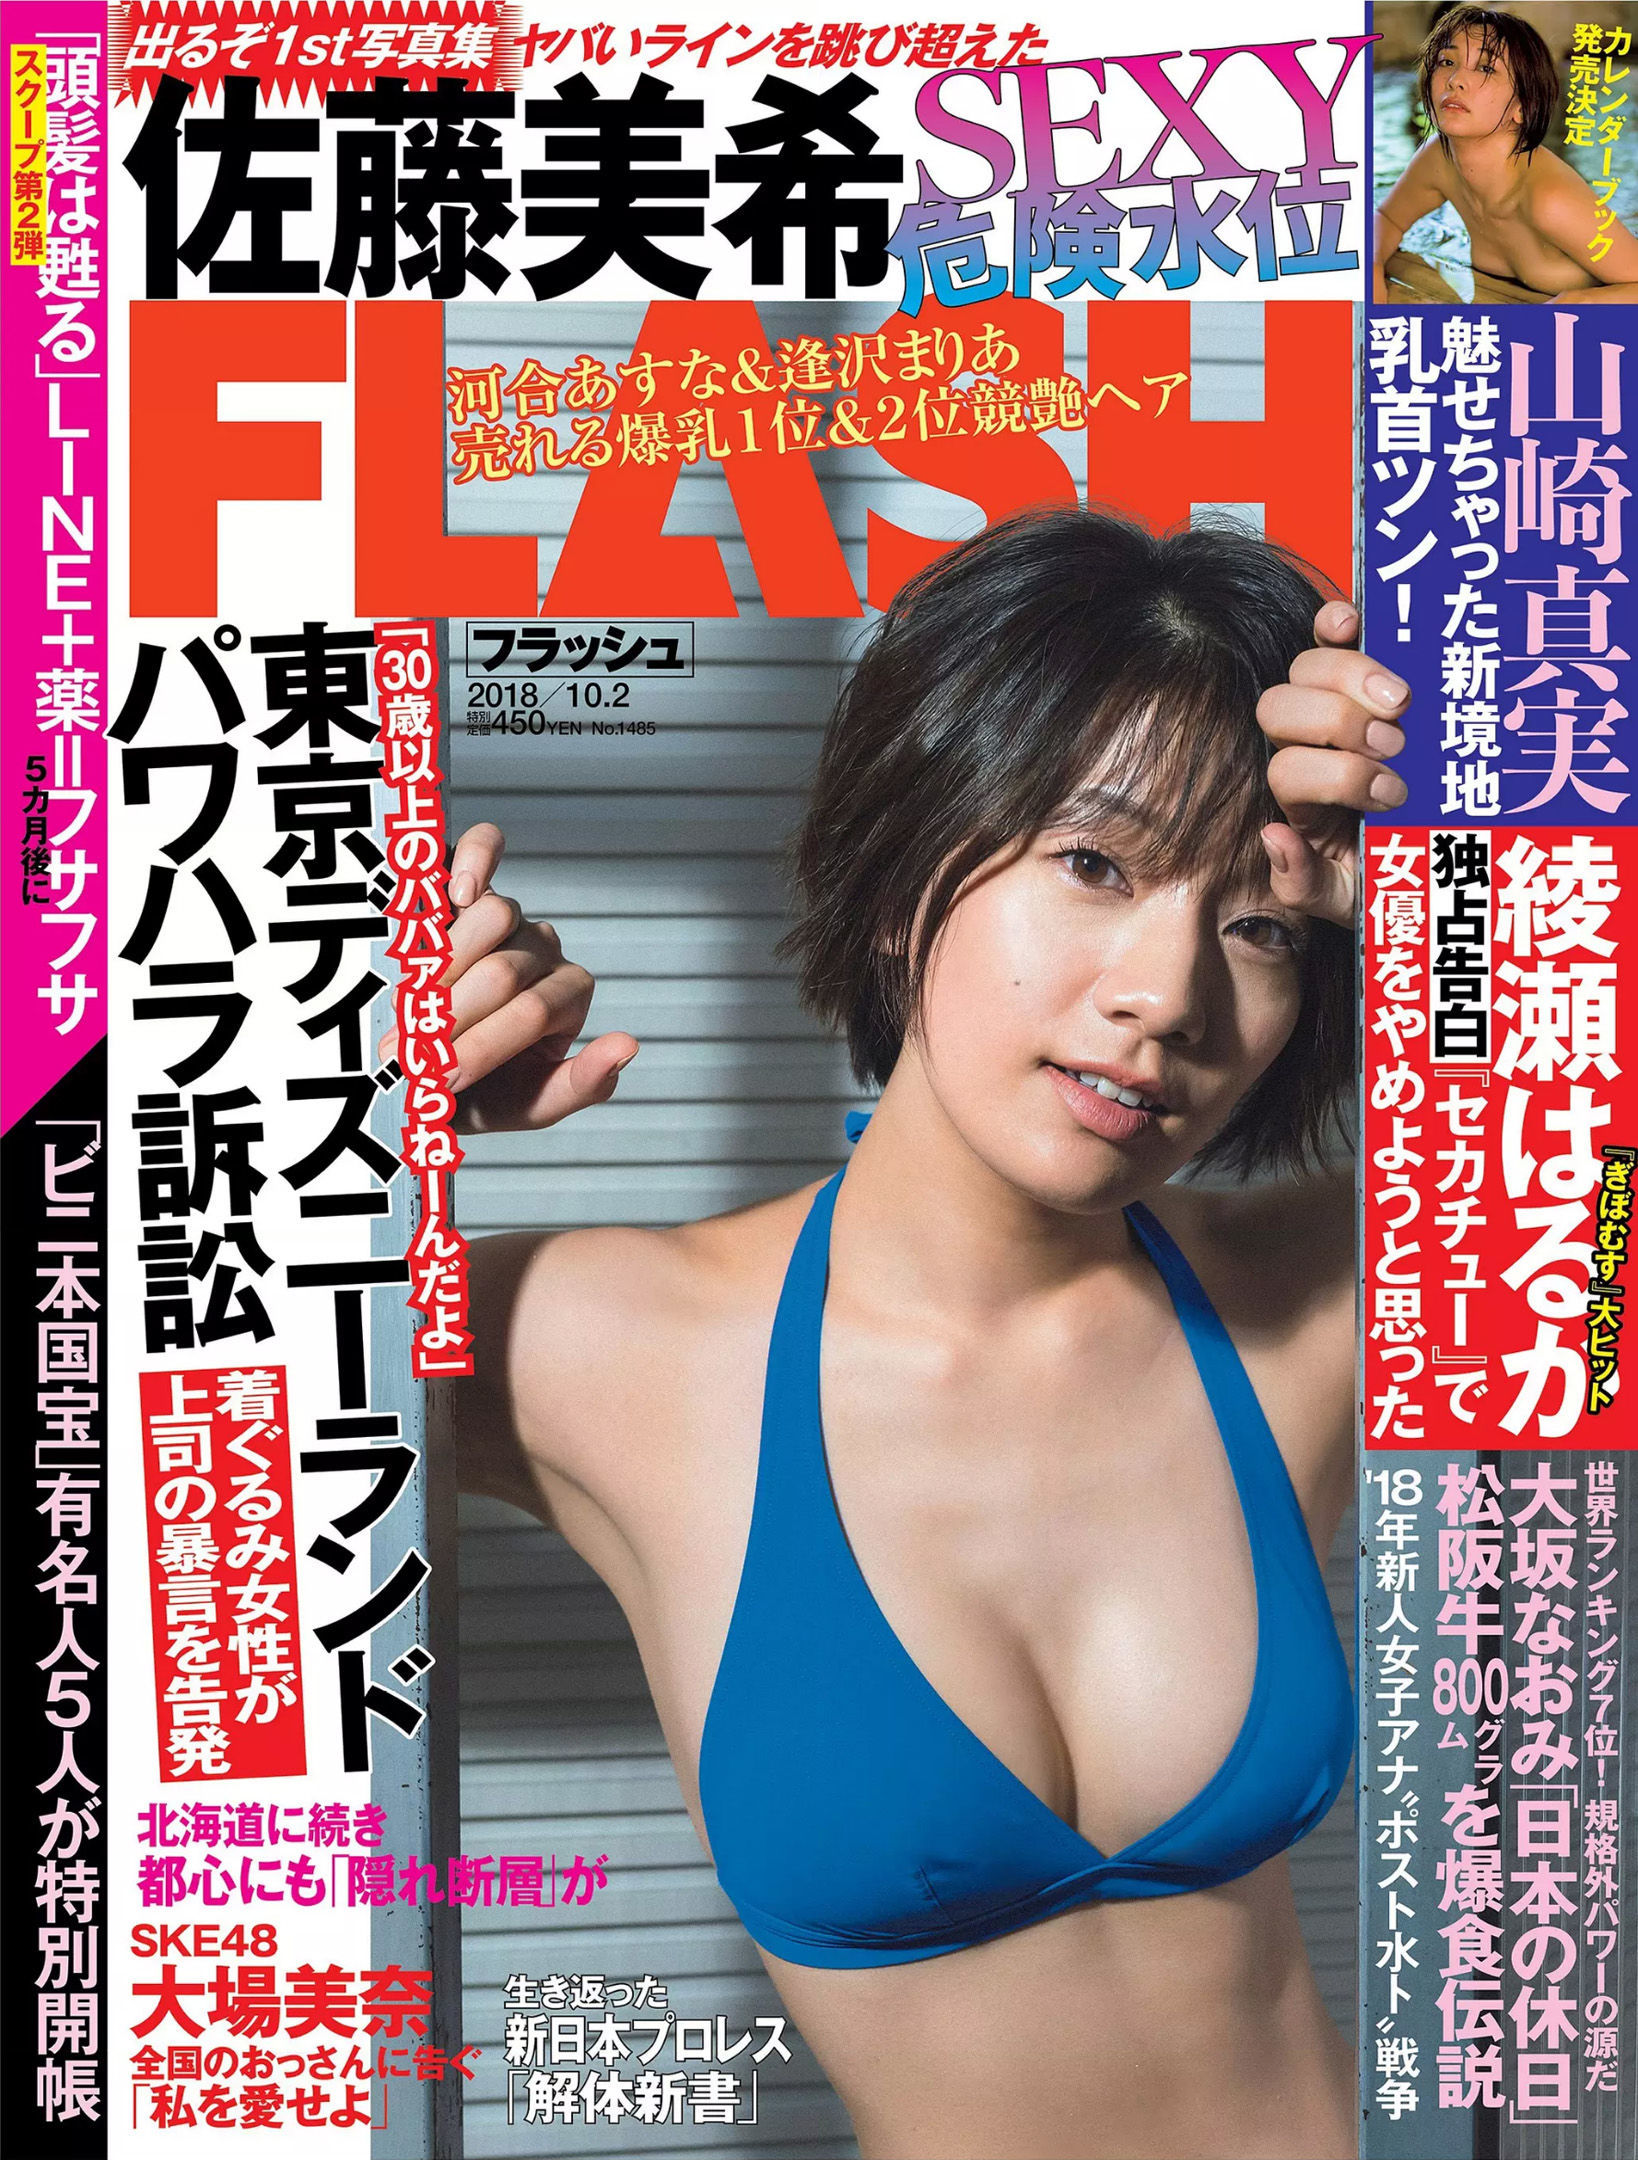 [FLASH]杂志:佐藤美希高品质写真作品个人分享(23P)